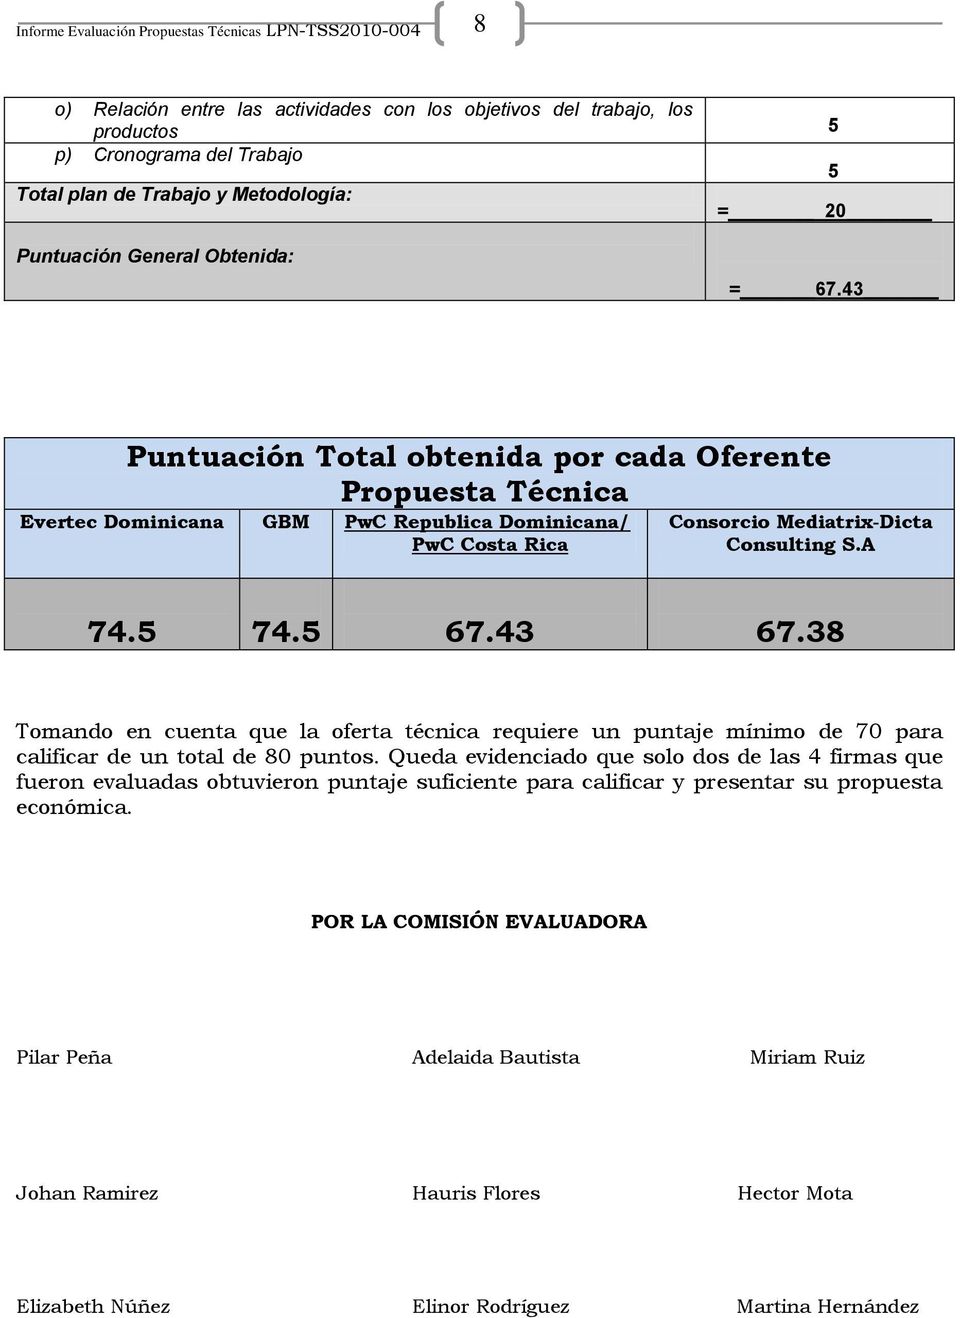 43 Puntuación Total obtenida por cada Oferente Propuesta Técnica Evertec Dominicana GBM PwC Republica Dominicana/ PwC Costa Rica Consorcio Mediatrix-Dicta Consulting S.A 74. 74. 67.43 67.